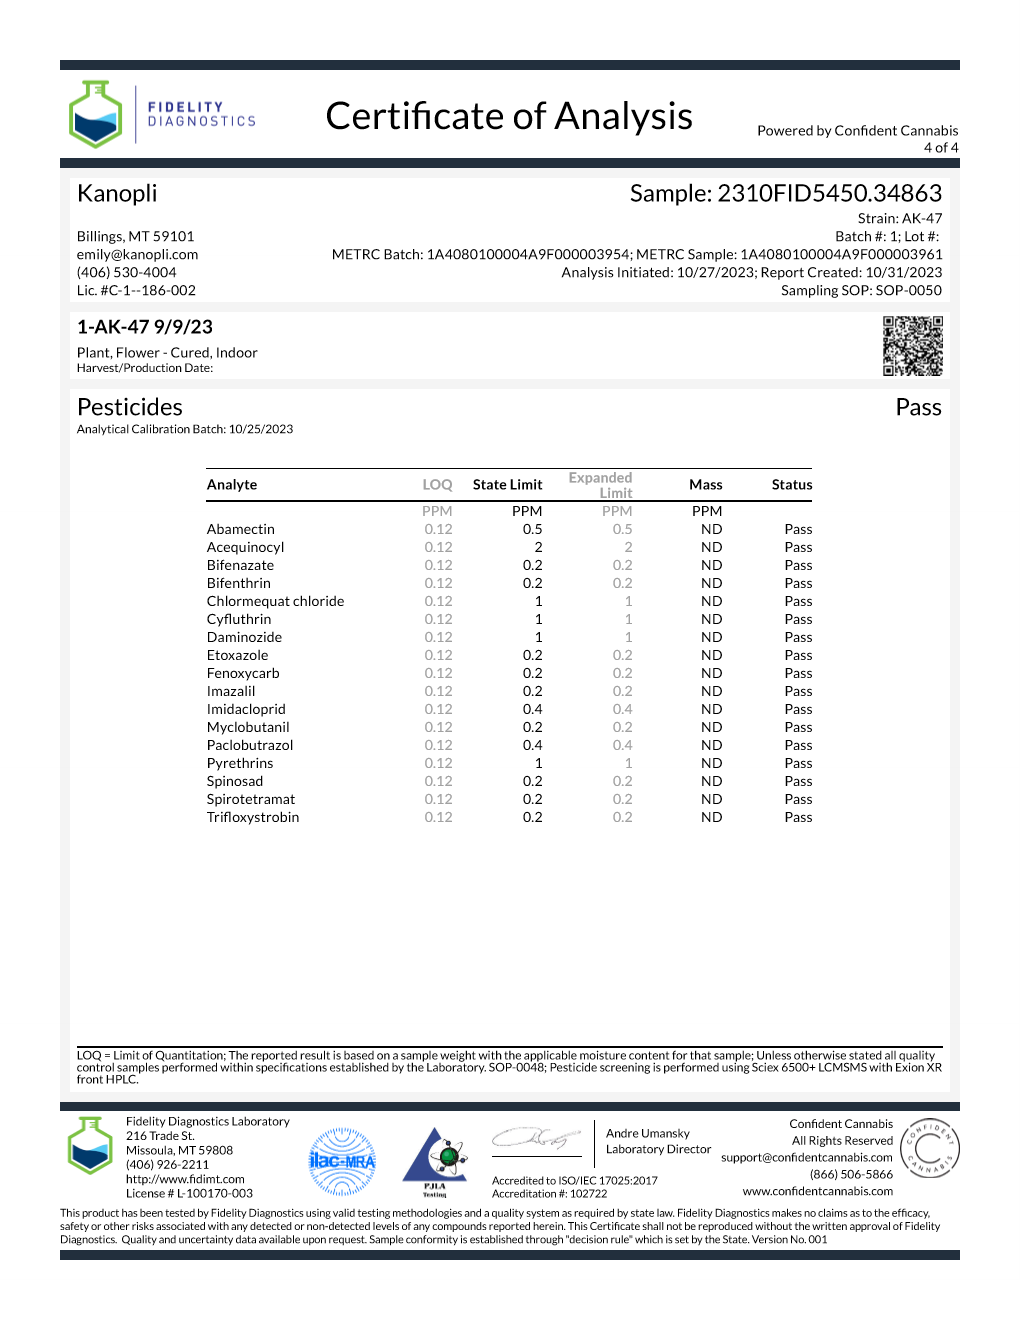 AK-47 - Sativa shake (29.90% THC) Sept. 2023 (5 grams)